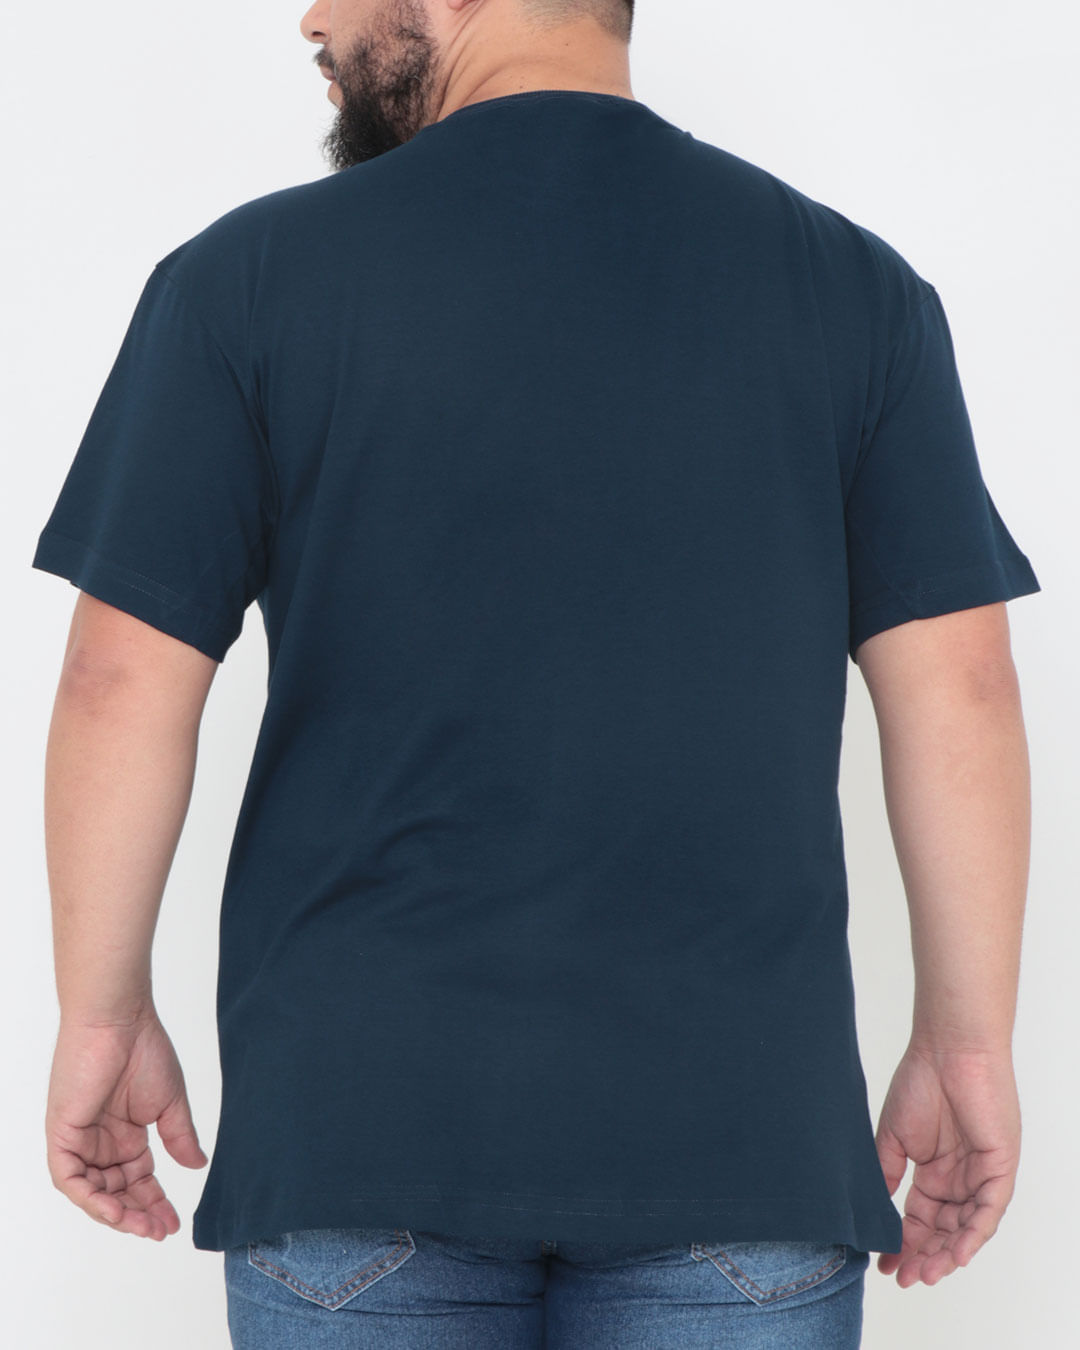 Camiseta-Plus-Size-Ecko-Plus-Azul-Marinho